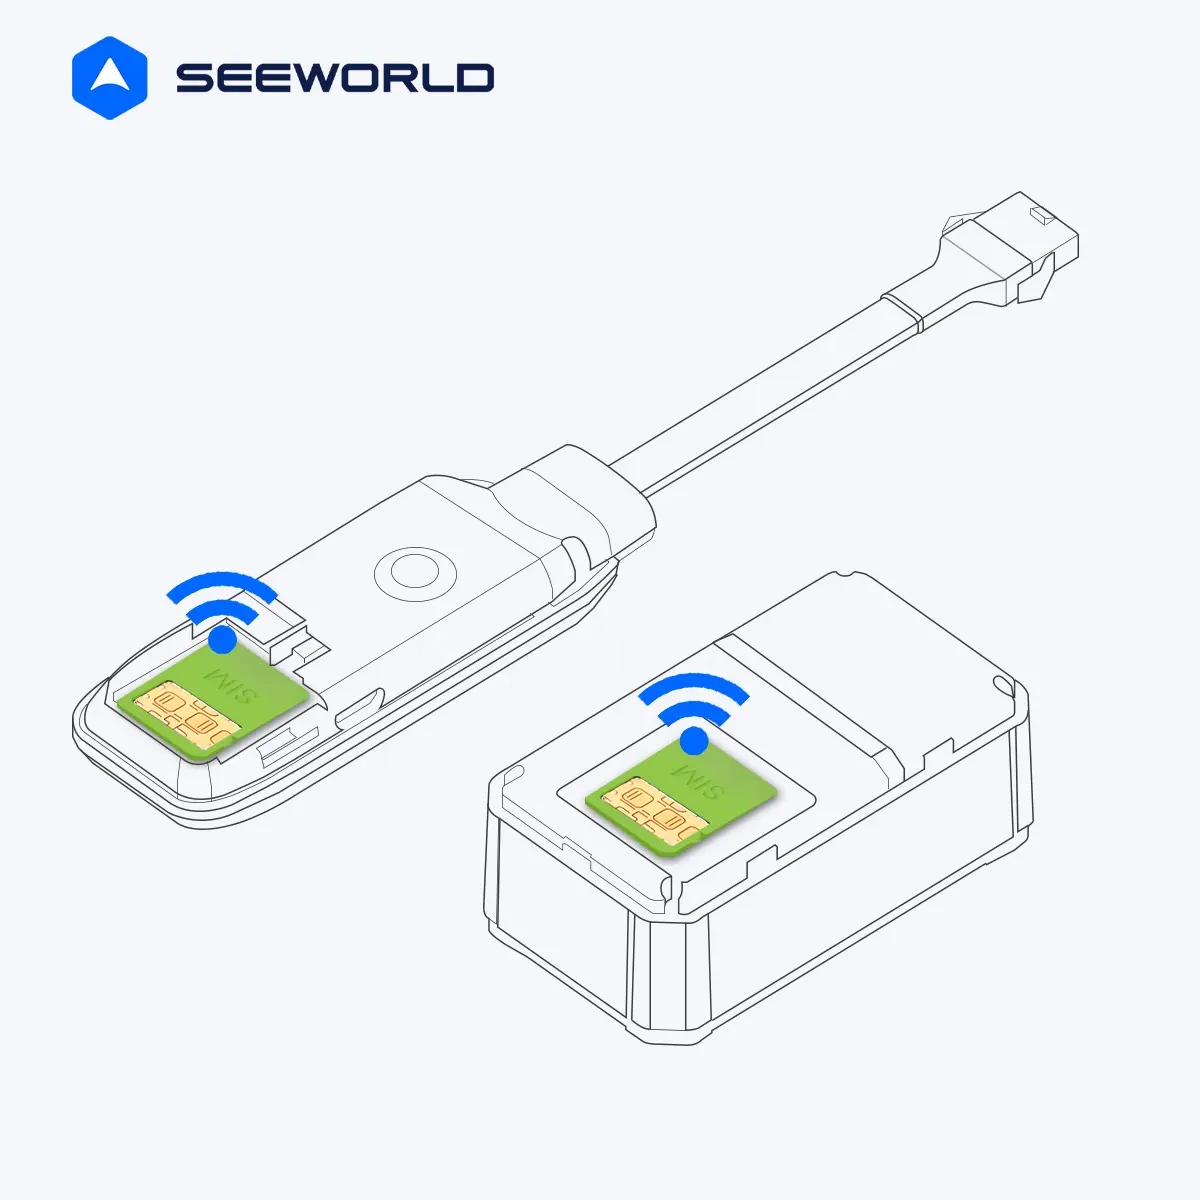 Seeworld Smart International Iot Data Simkaart M 2M Voor Gps Tracking Device